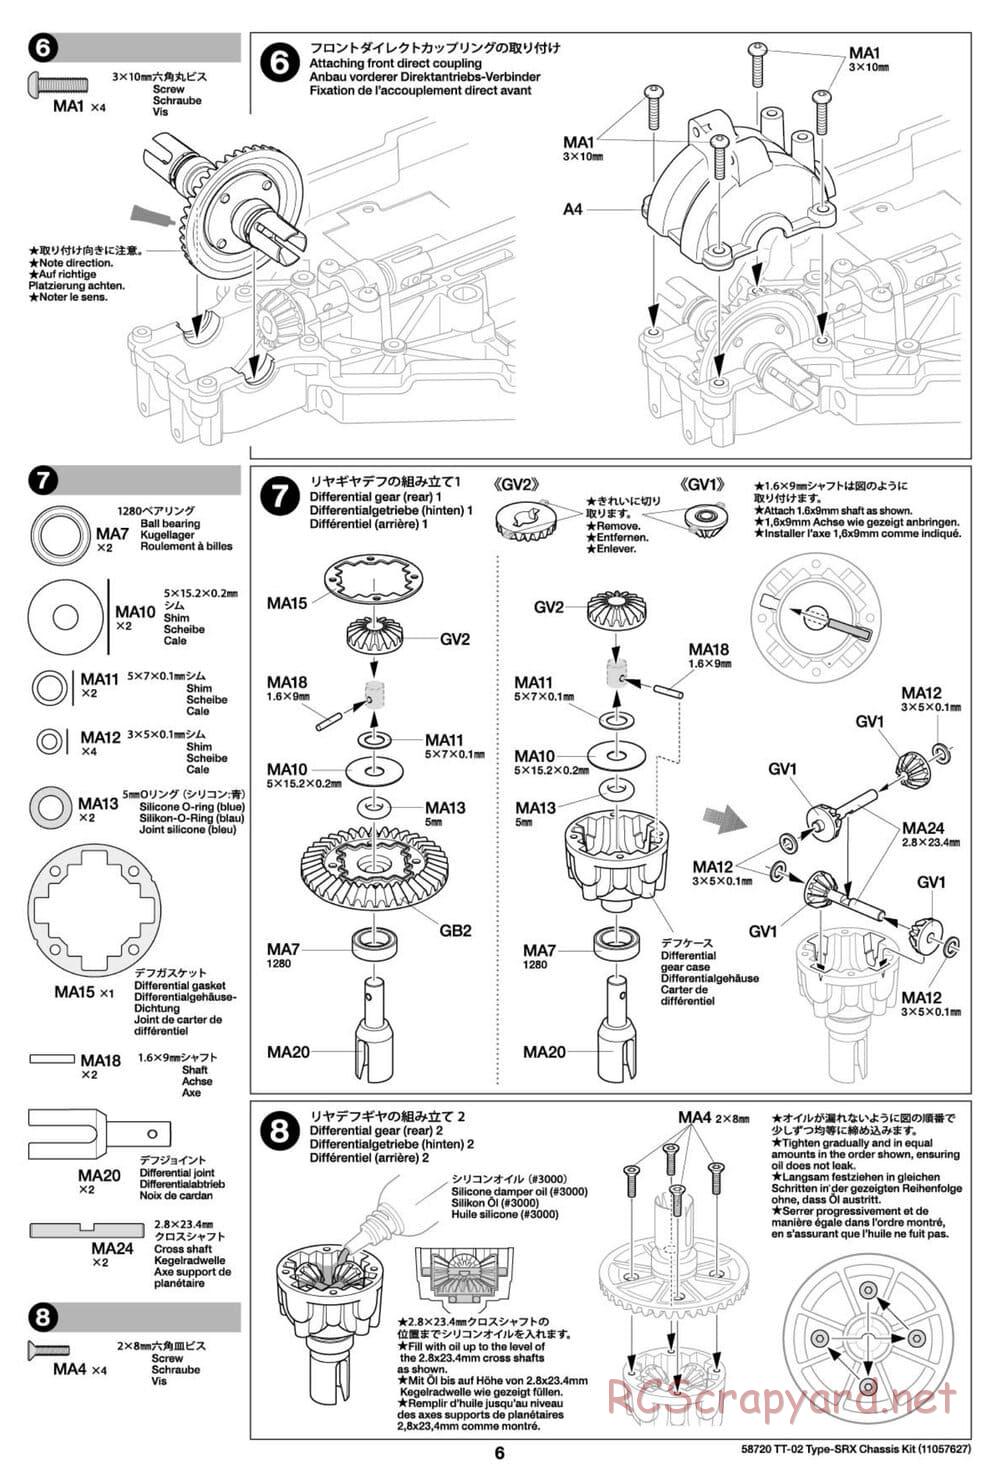 Tamiya - TT-02 Type-SRX Chassis - Manual - Page 6